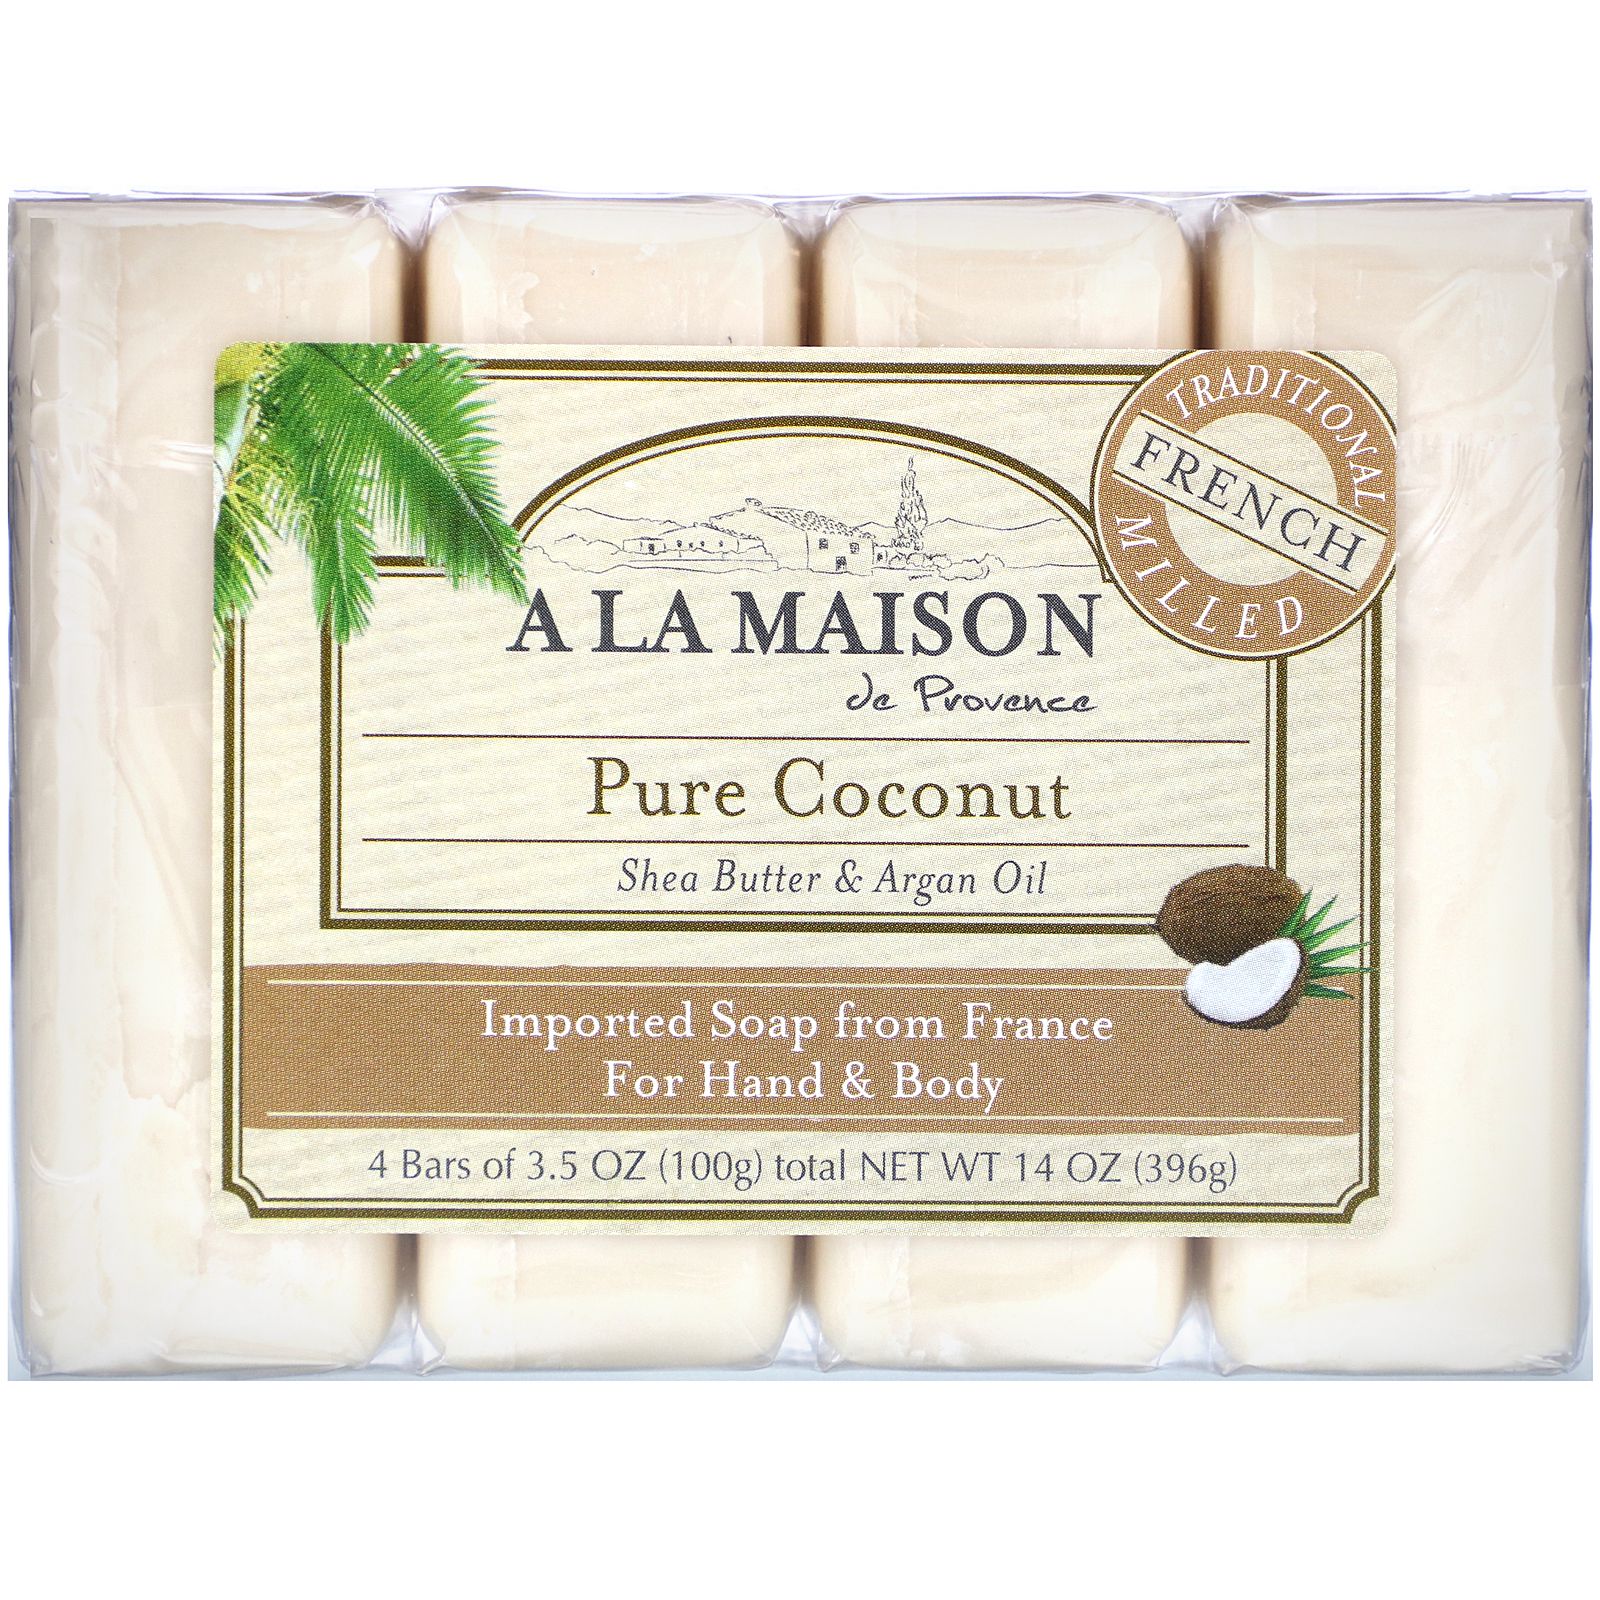 A La Maison de Provence Мыло для рук & тела Чистый кокос 4 бруска по 3.5 унции a la maison de provence мыло для рук и тела морская соль 4 бруска по 100 г 3 5 унции каждый